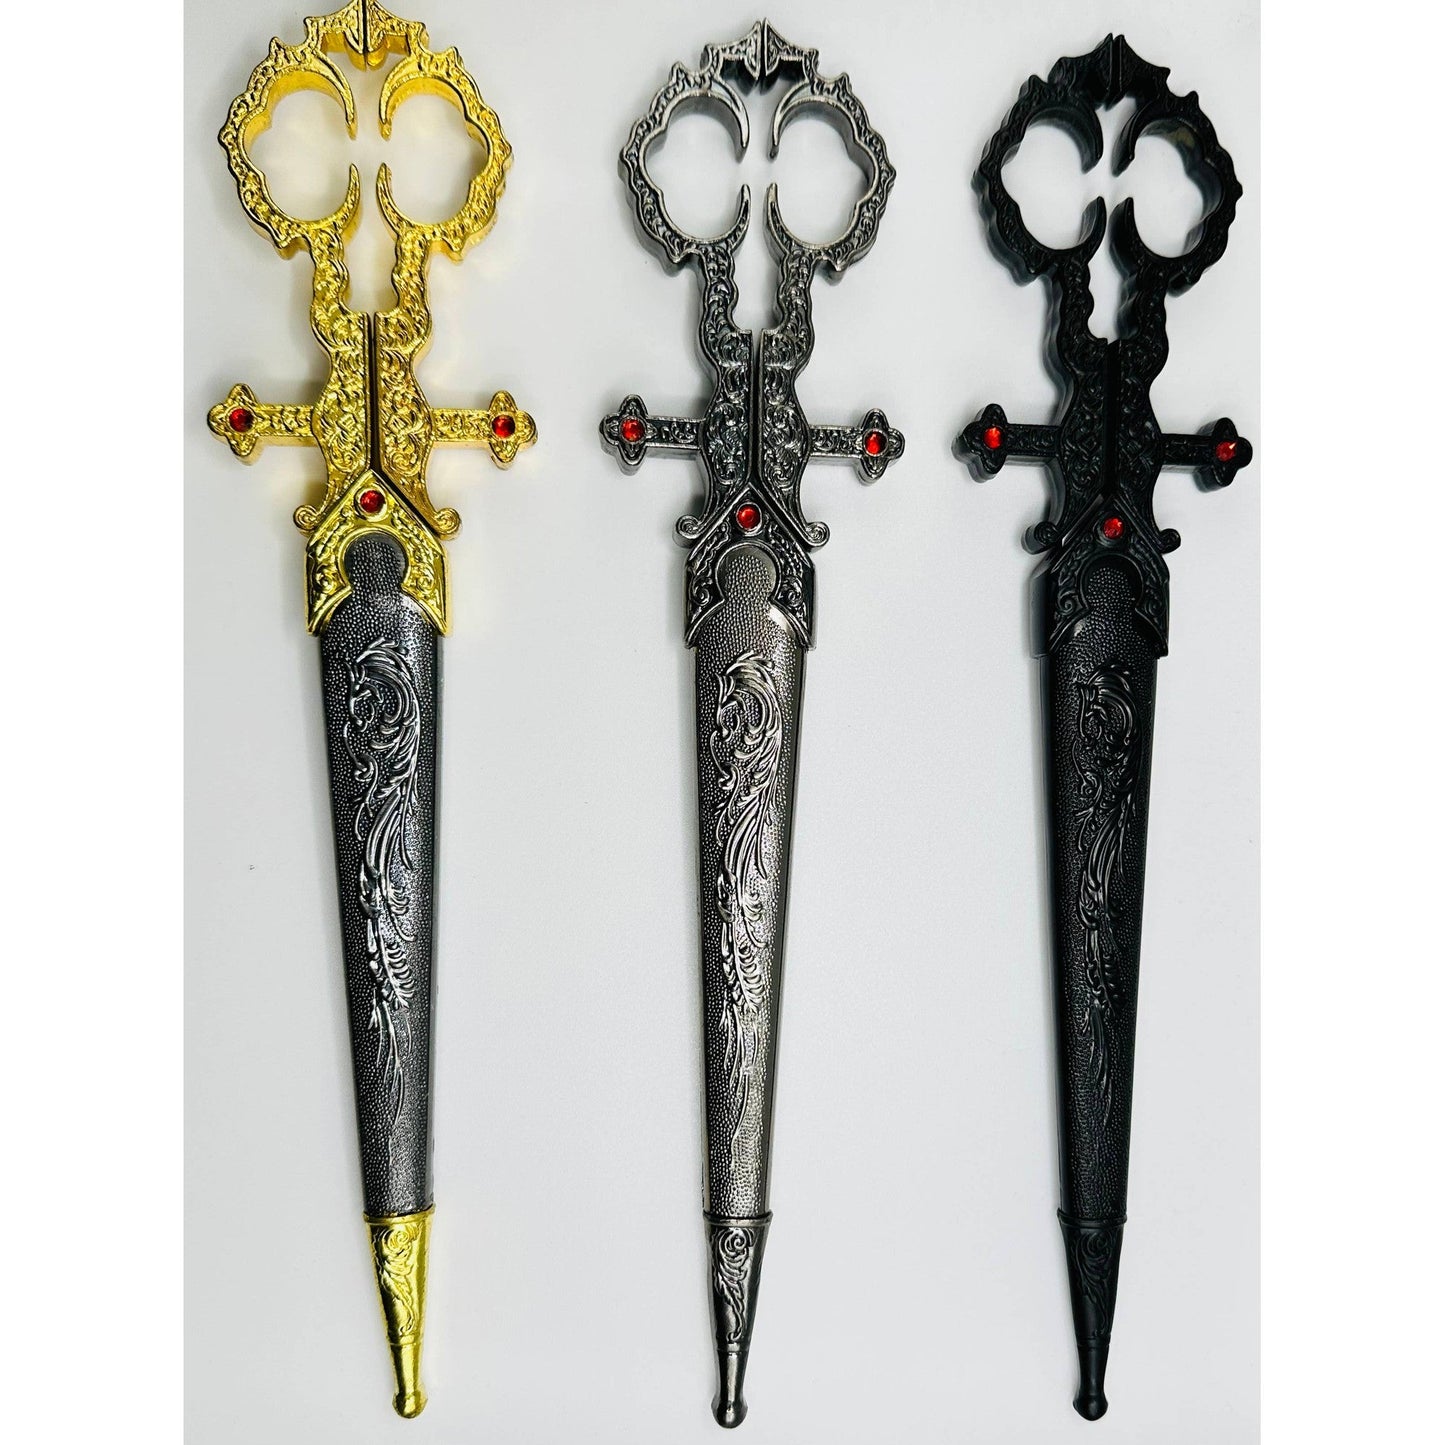 Black Renaissance Scissors with Scissors Holder | Vintage Sword-like